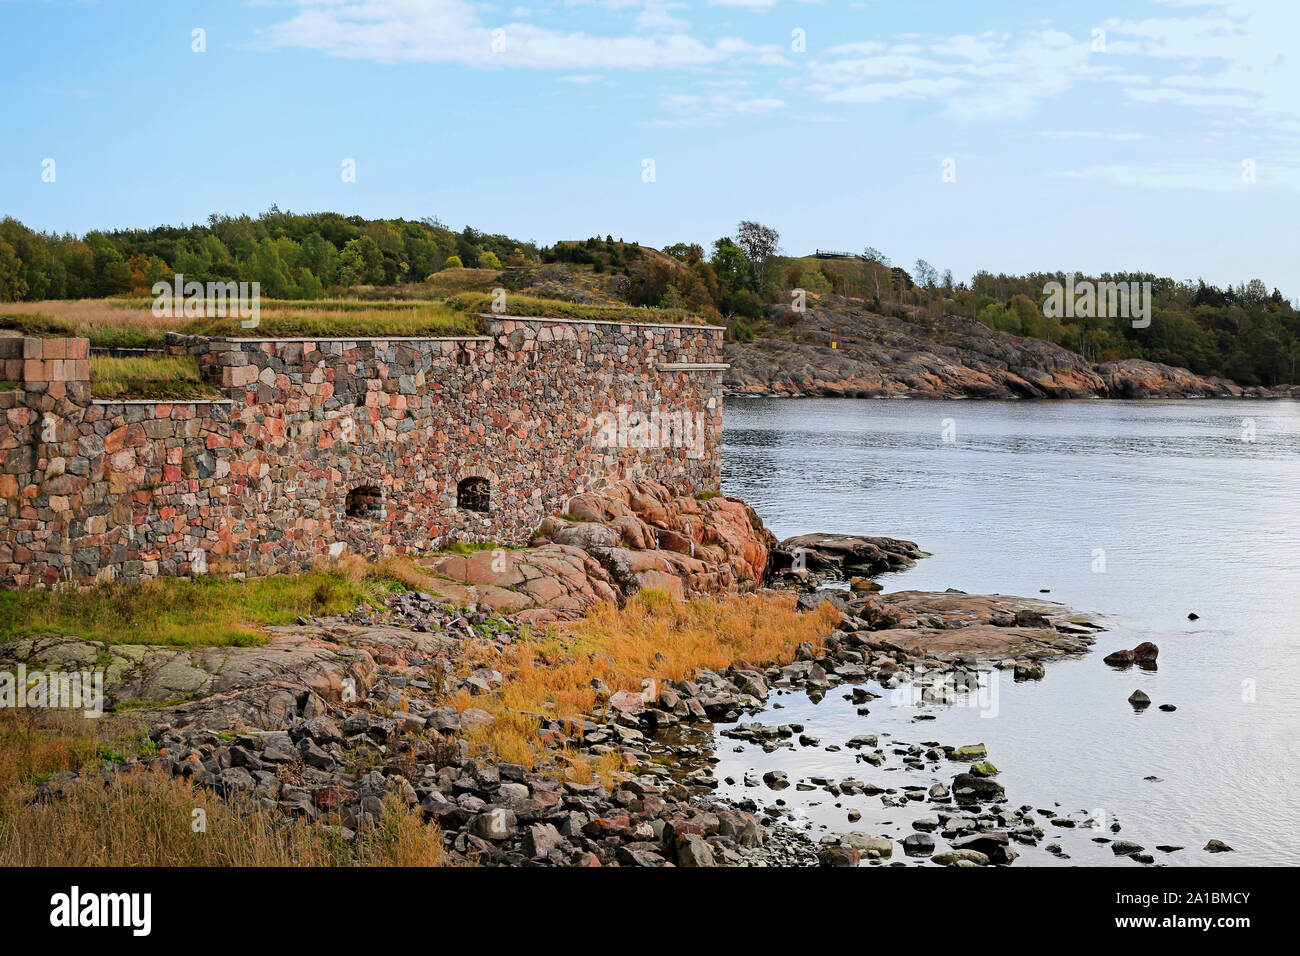 Historic fortifications facing the Gulf of Finland on Kustaanmiekka island, Suomenlinna, an UNESCO World Heritage site in Helsinki, Finland. Stock Photo